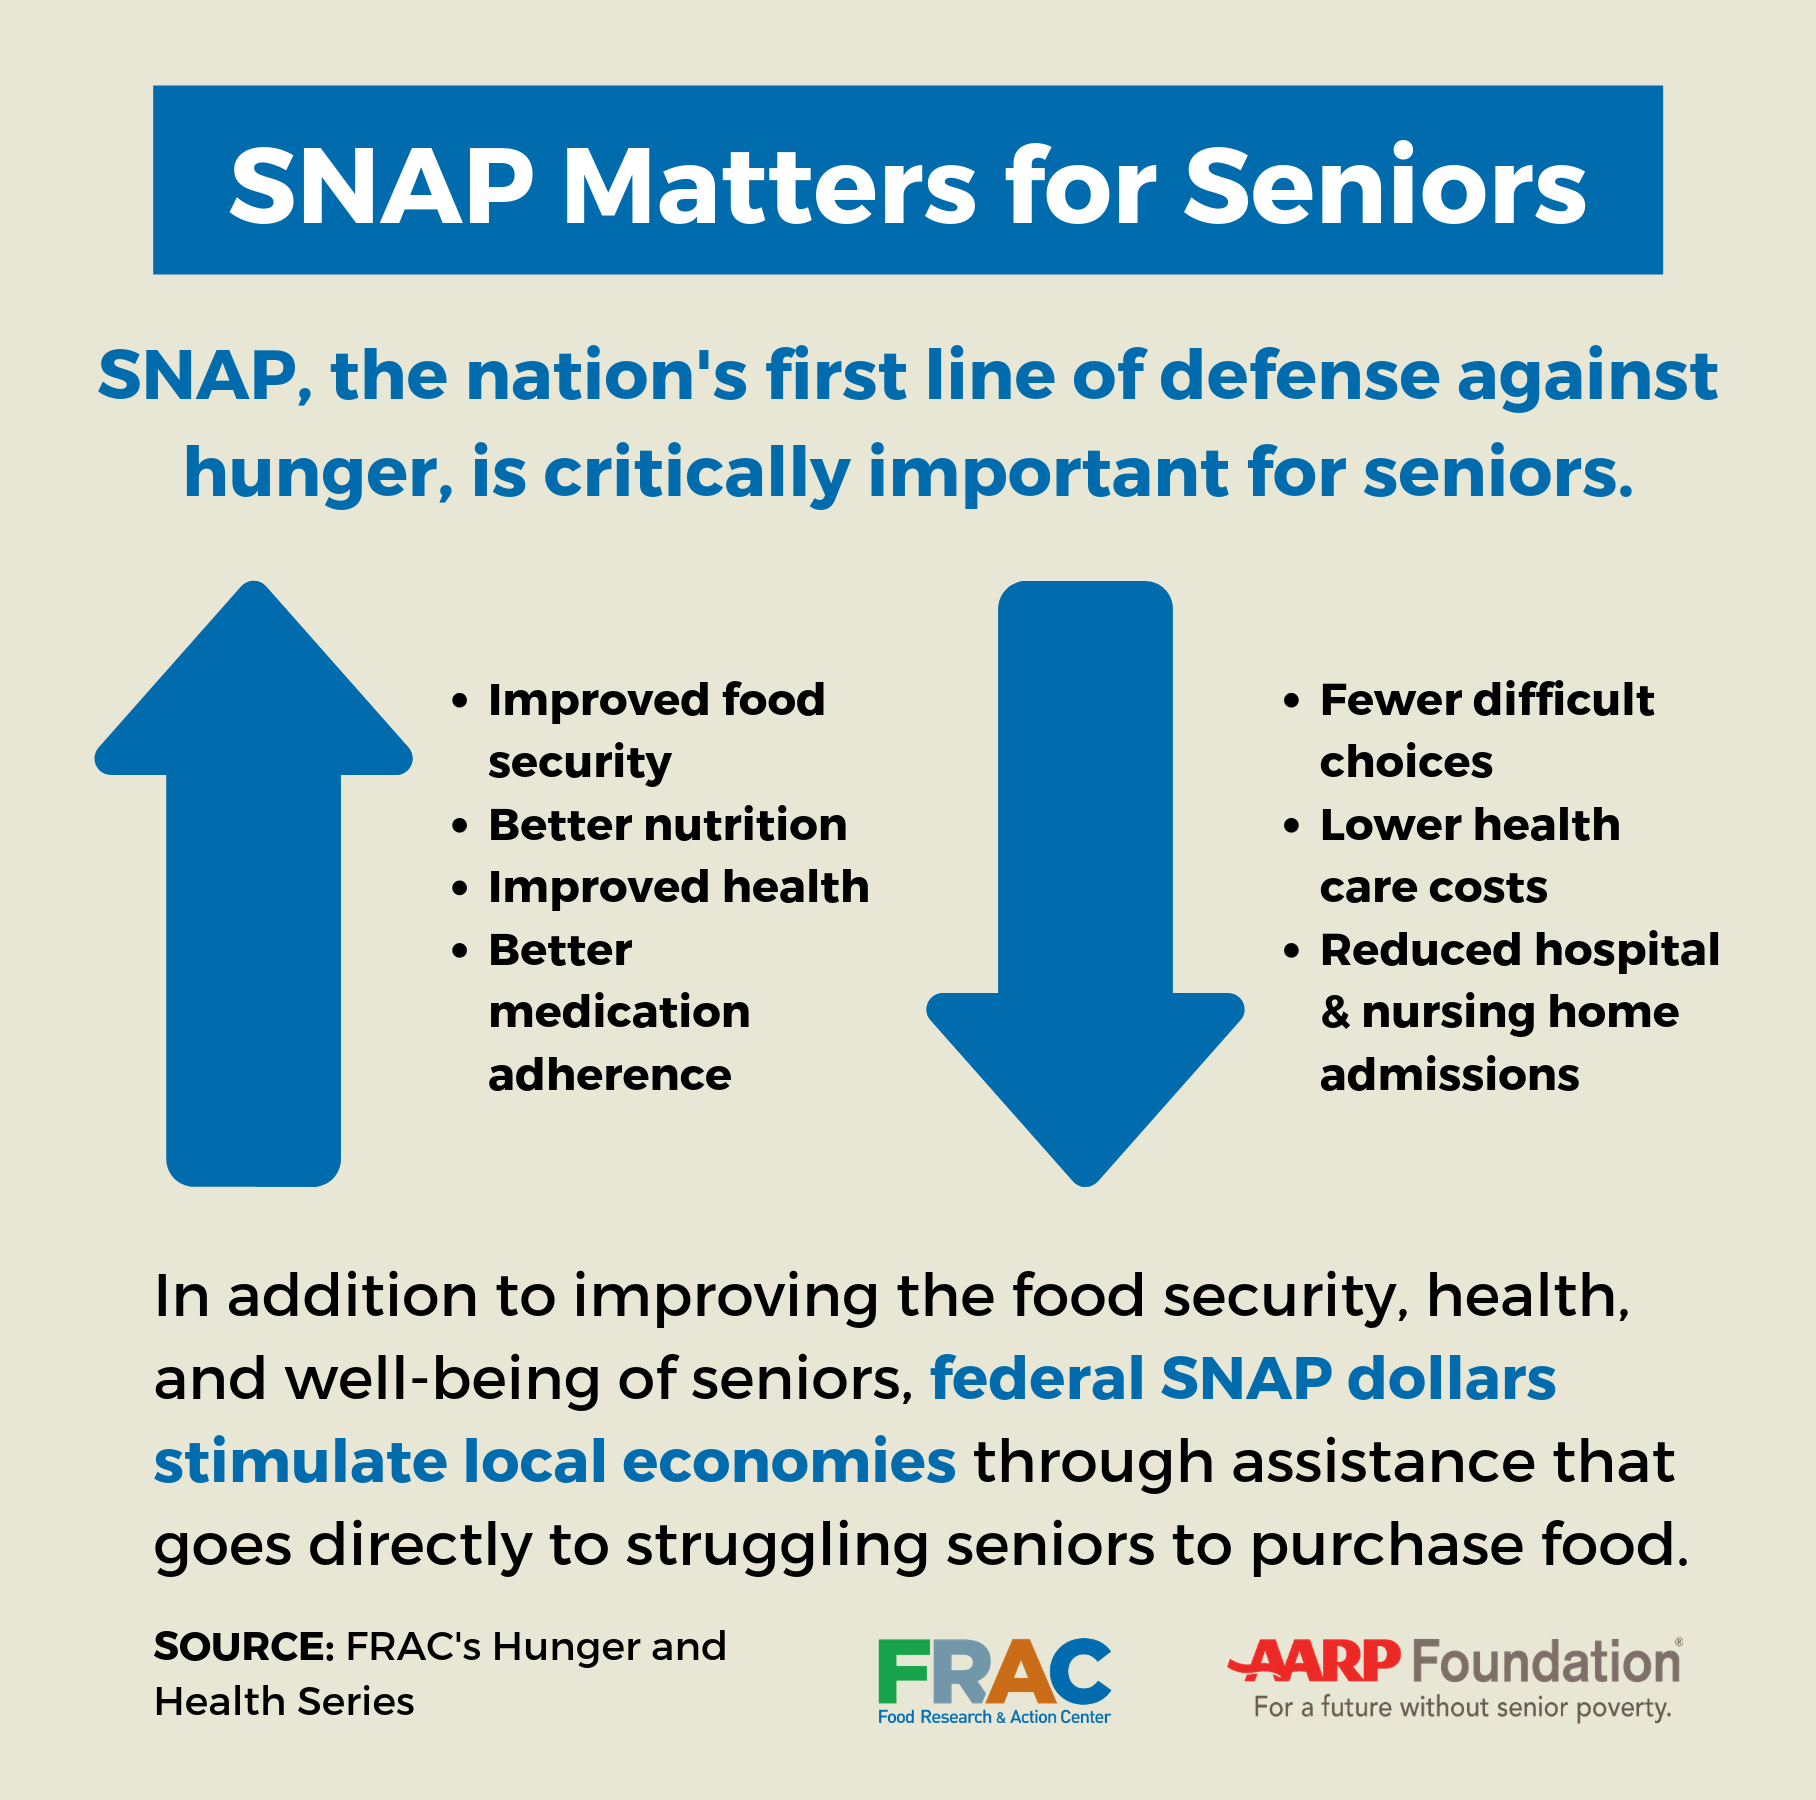 https://frac.org/wp-content/uploads/SNAP-Matters-for-Seniors-3.png